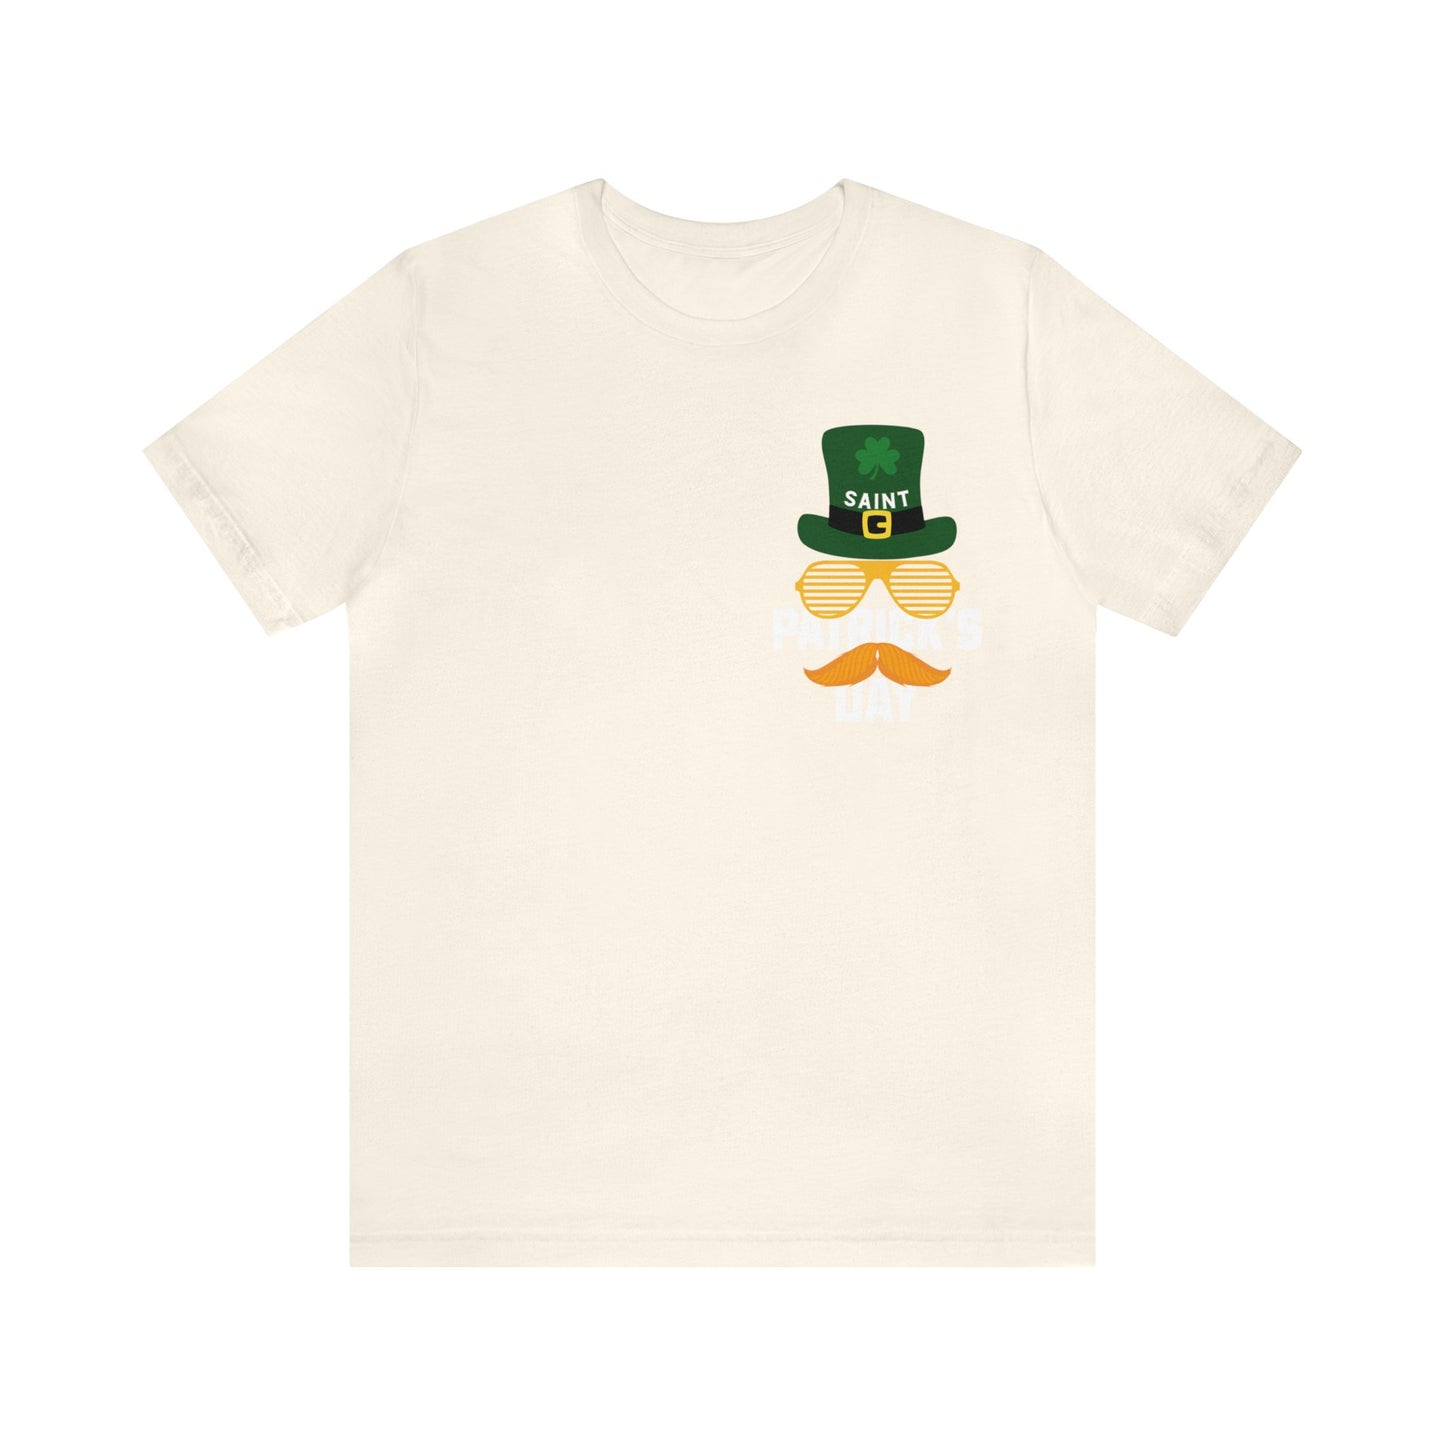 St Patrick's Day shirt feeling Lucky shirt St Paddys day shirt St Patrick hat shirt